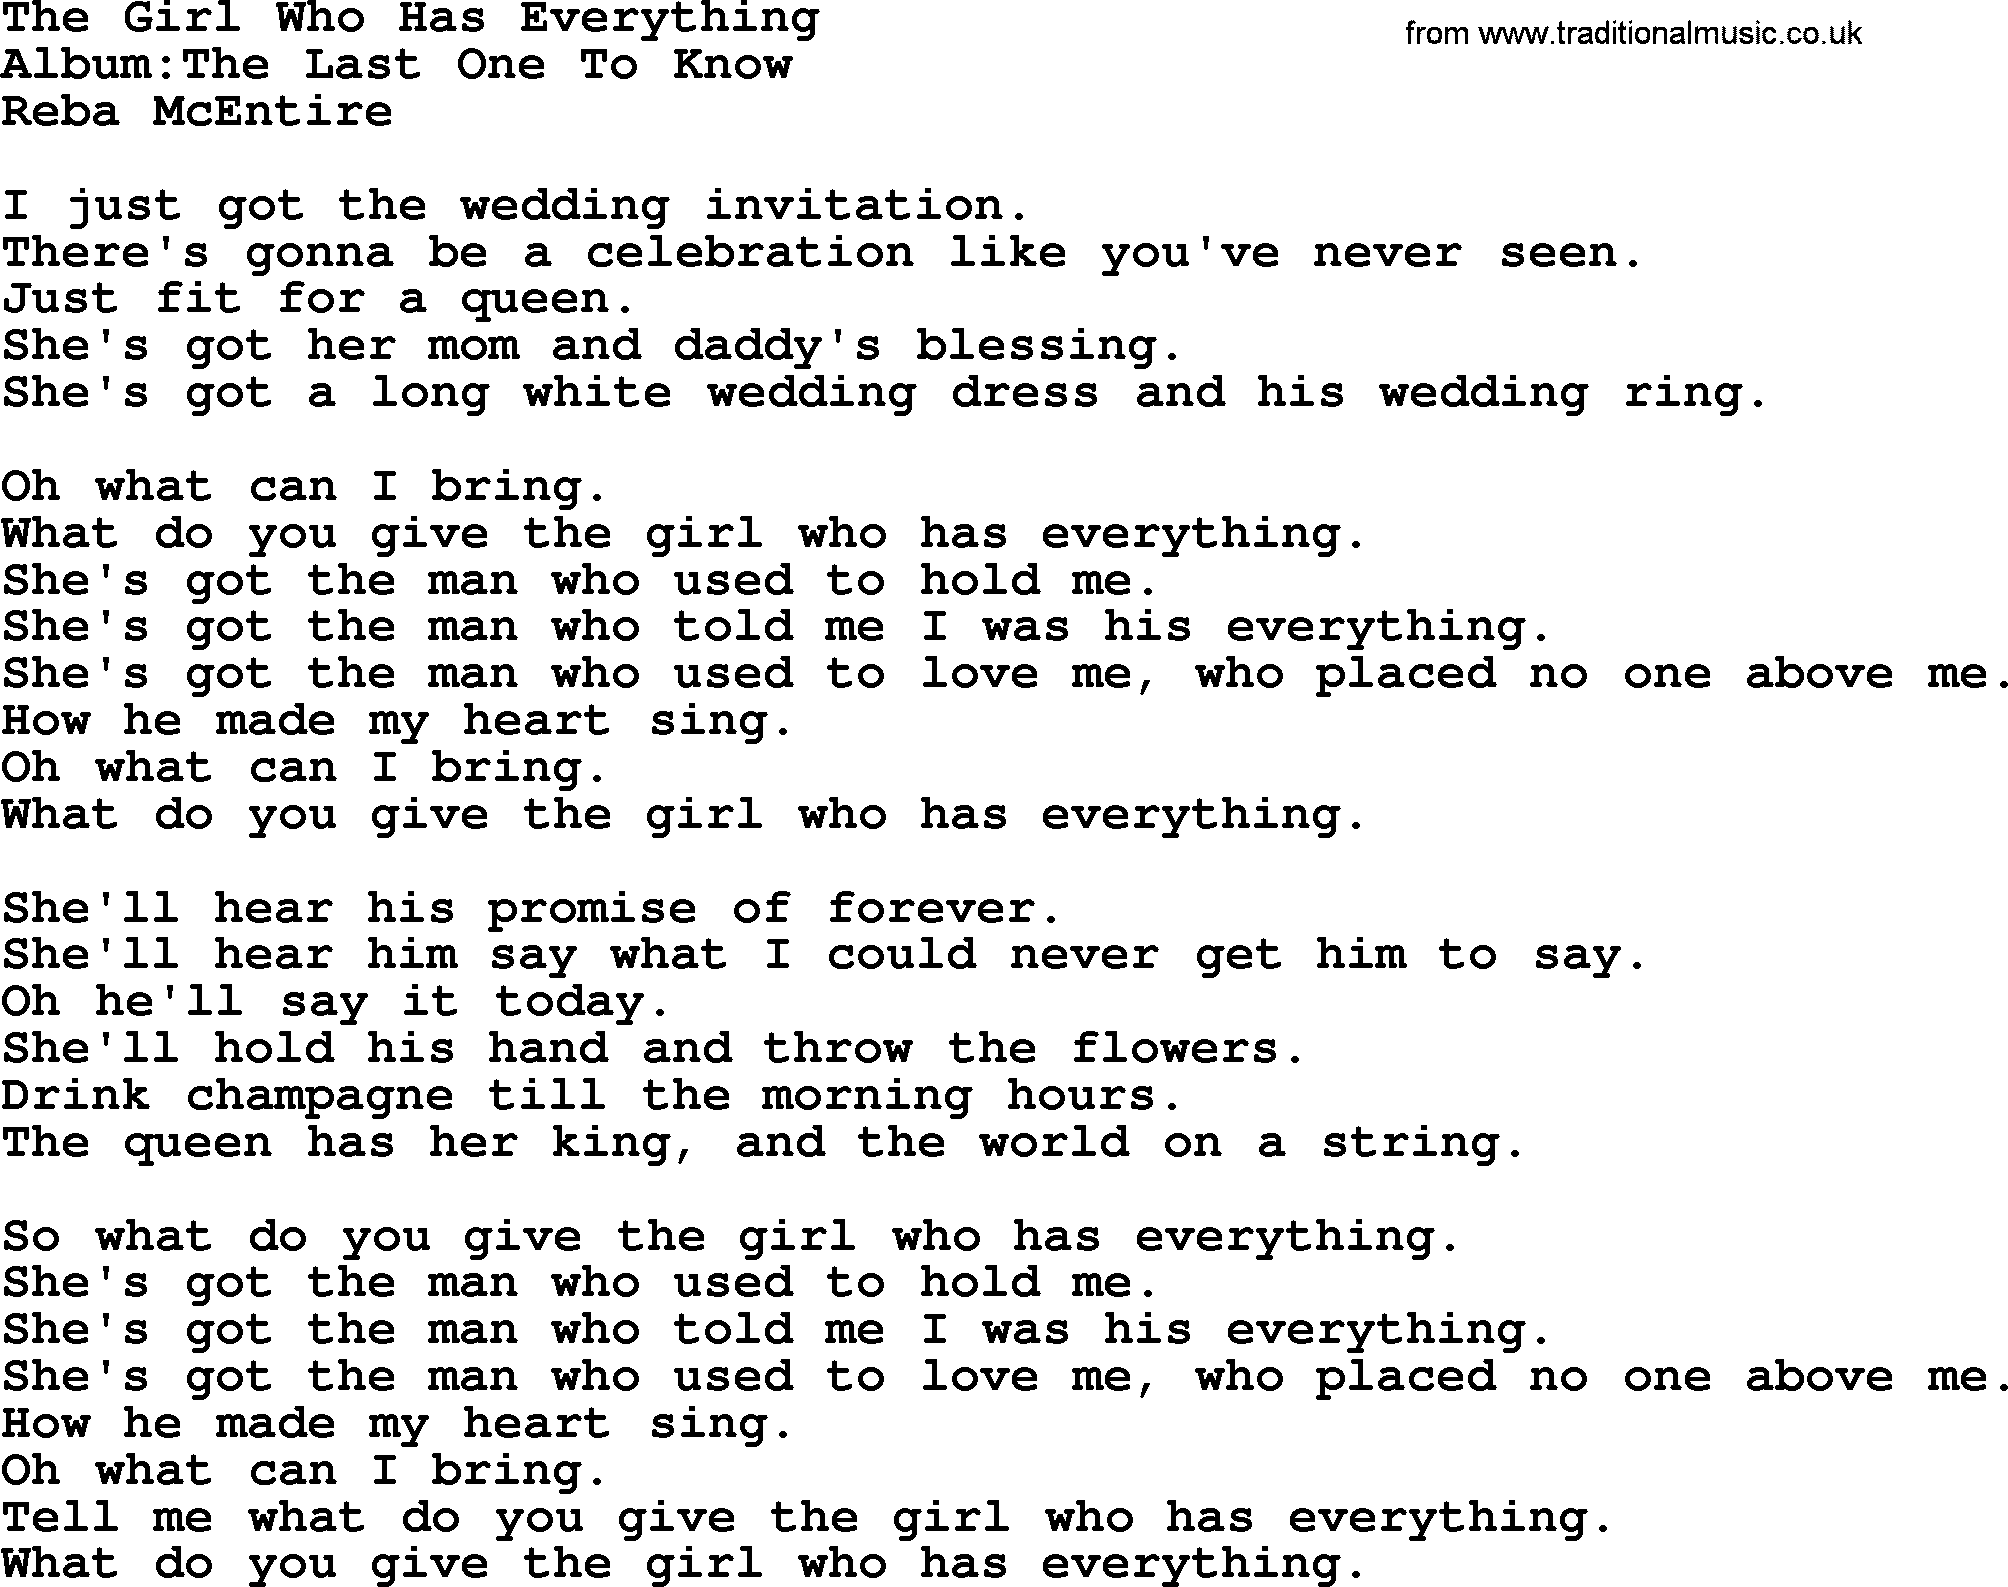 Reba McEntire song: The Girl Who Has Everything lyrics